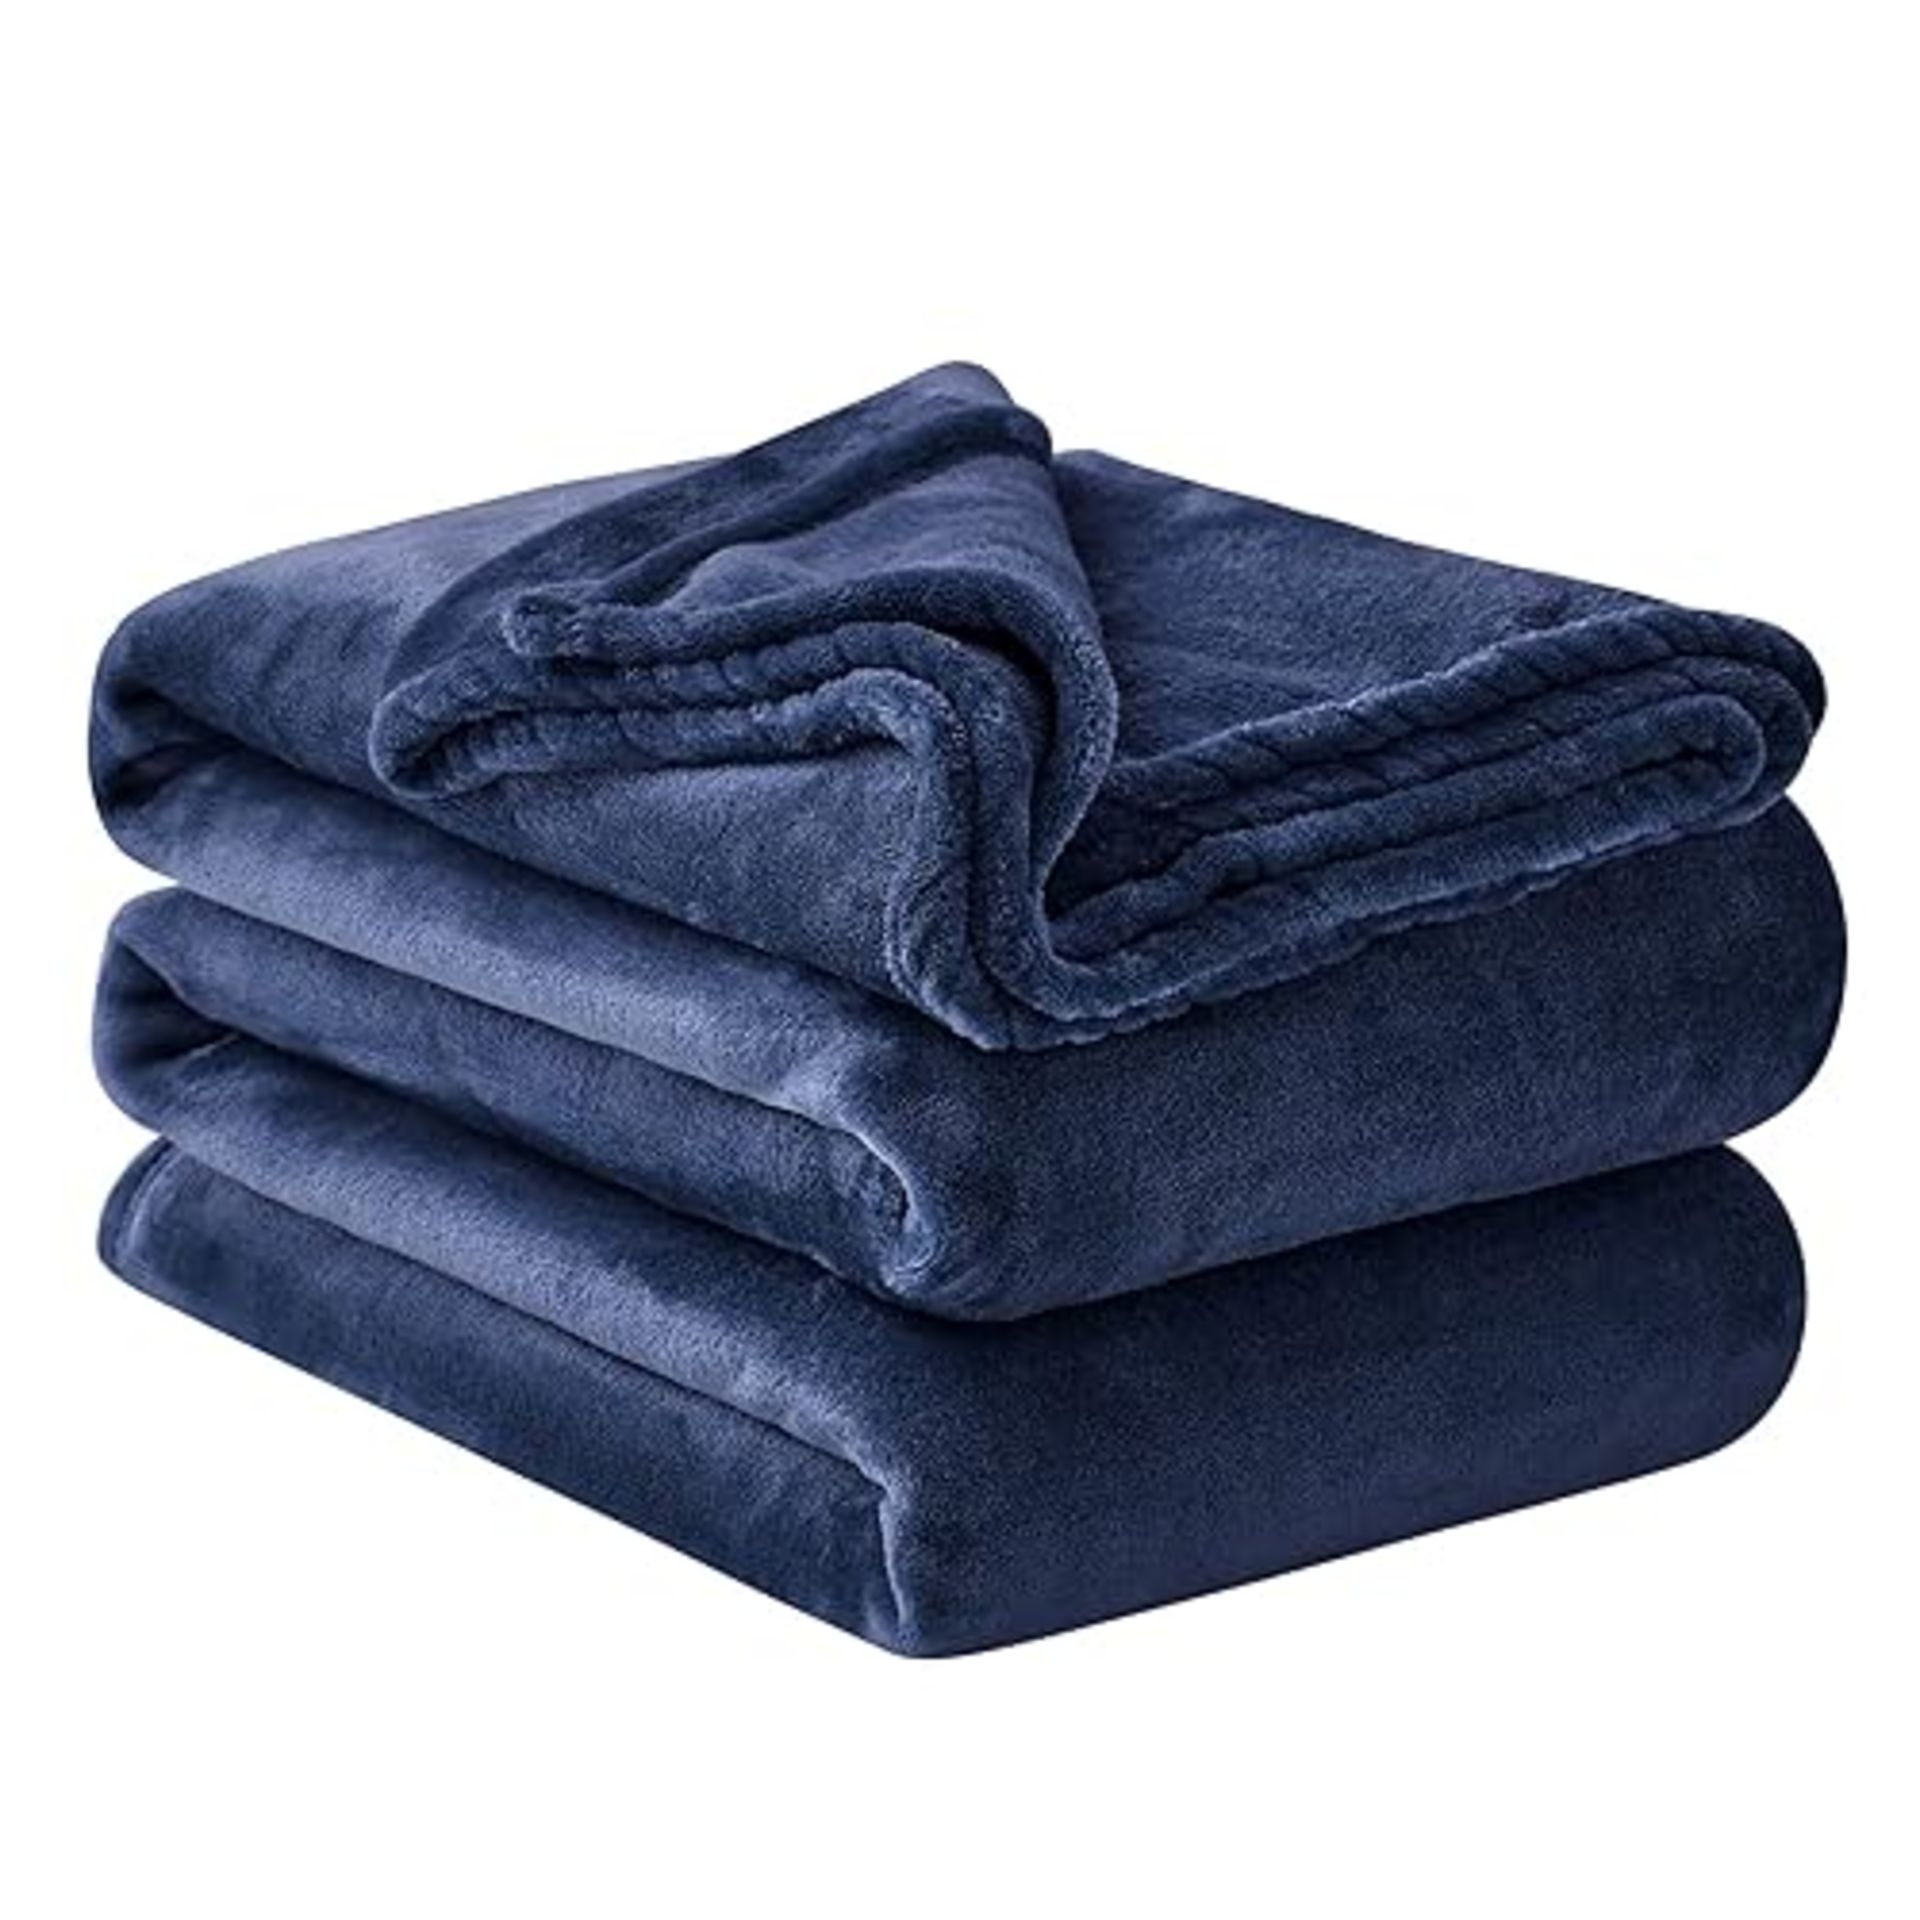 Aisbo Fleece Throw Blanket Navy Blue - Versatile Soft Warm King Size Blanket Fluffy Extra Large Thr